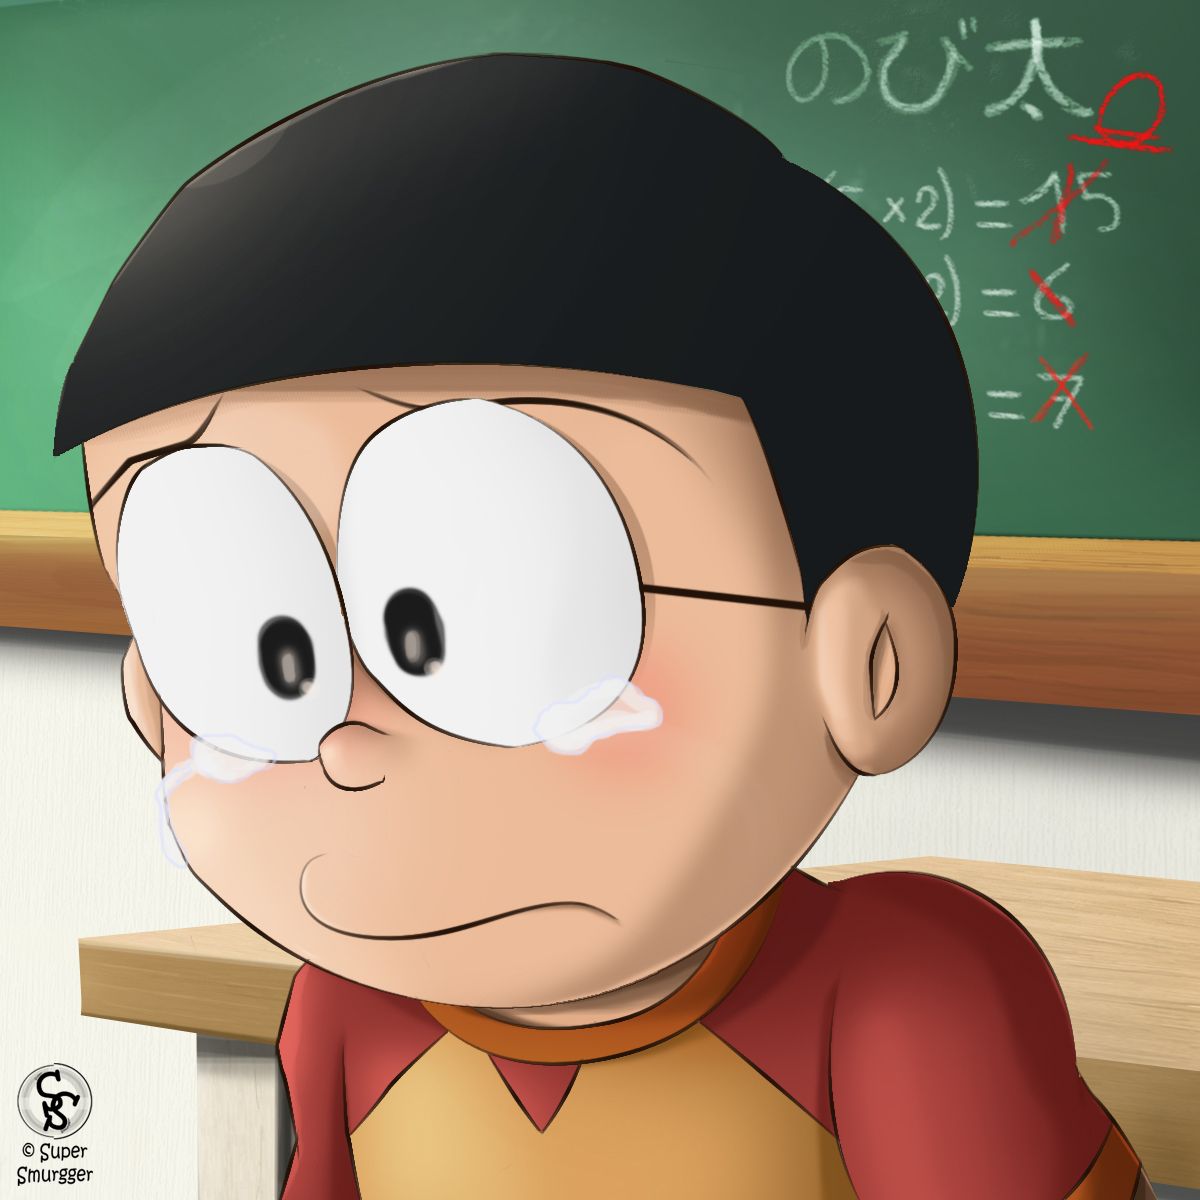 Ảnh mặt nobita buồn